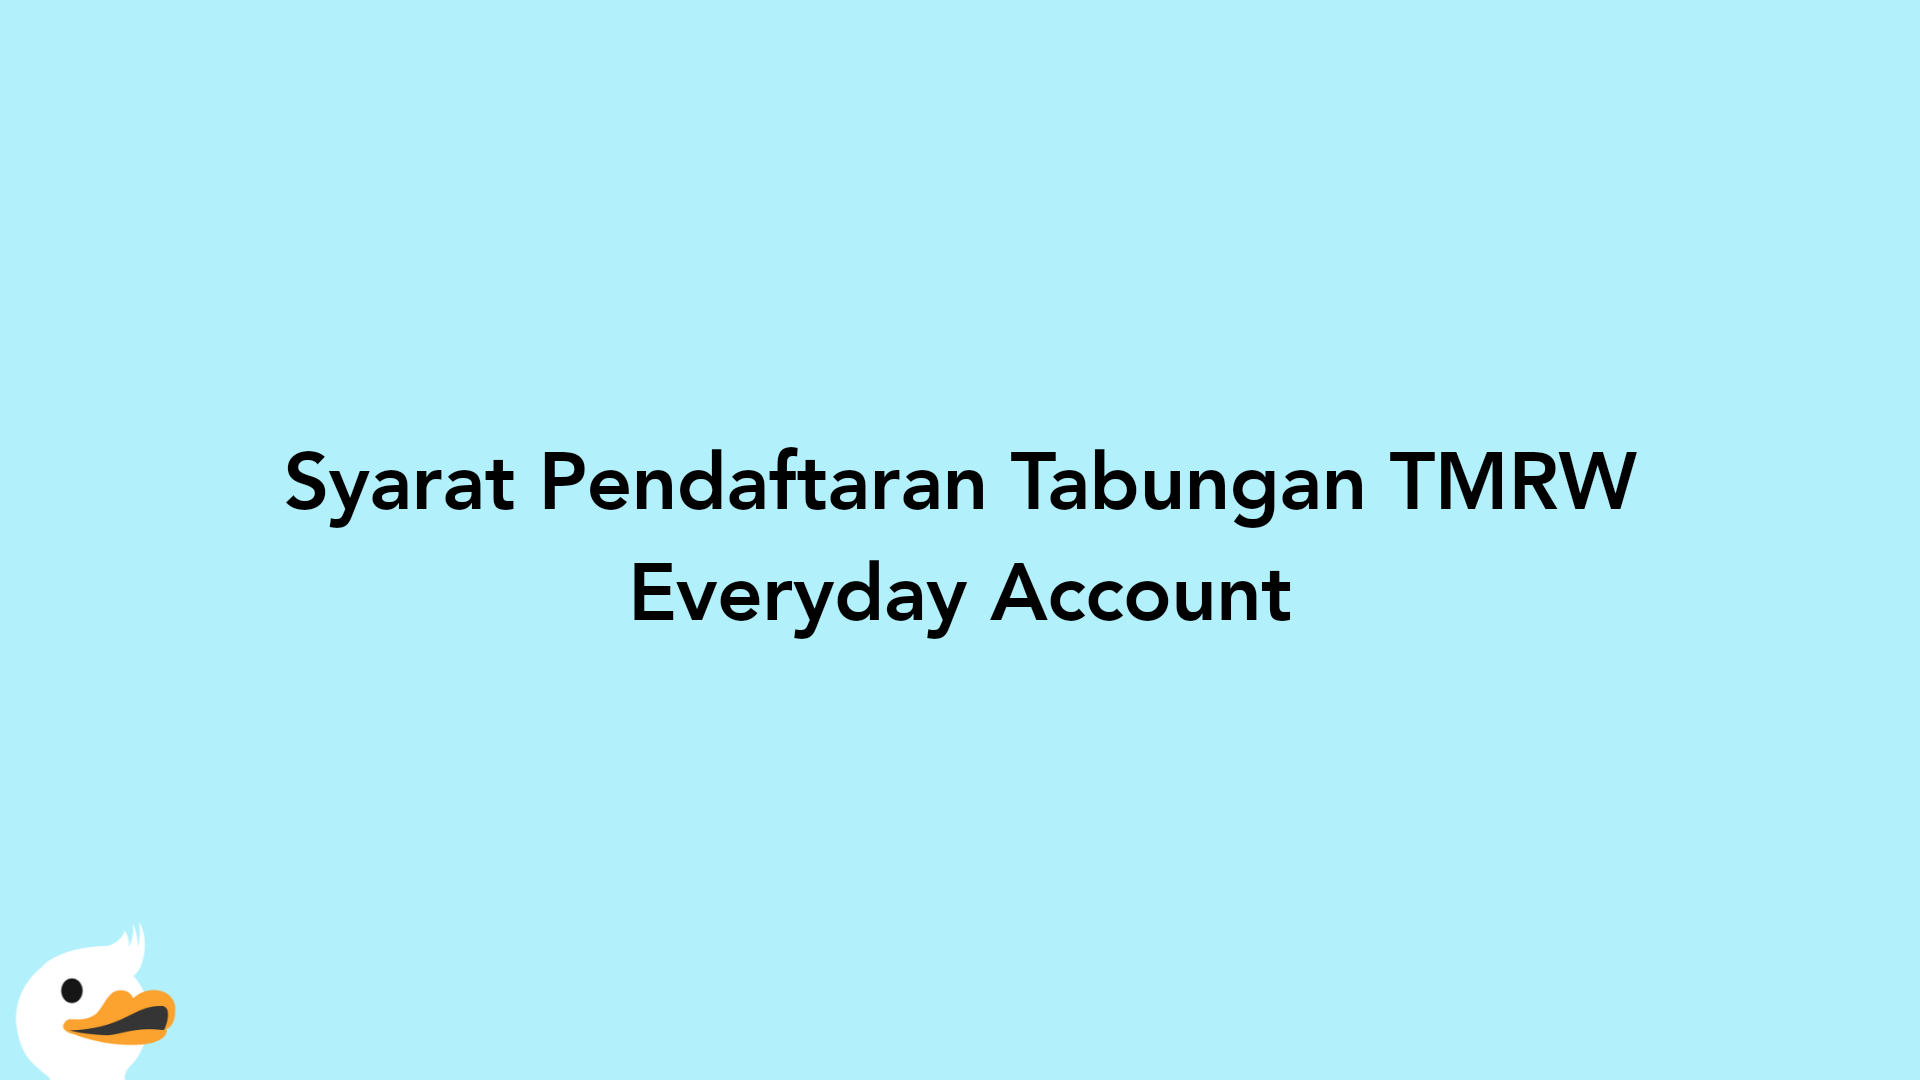 Syarat Pendaftaran Tabungan TMRW Everyday Account